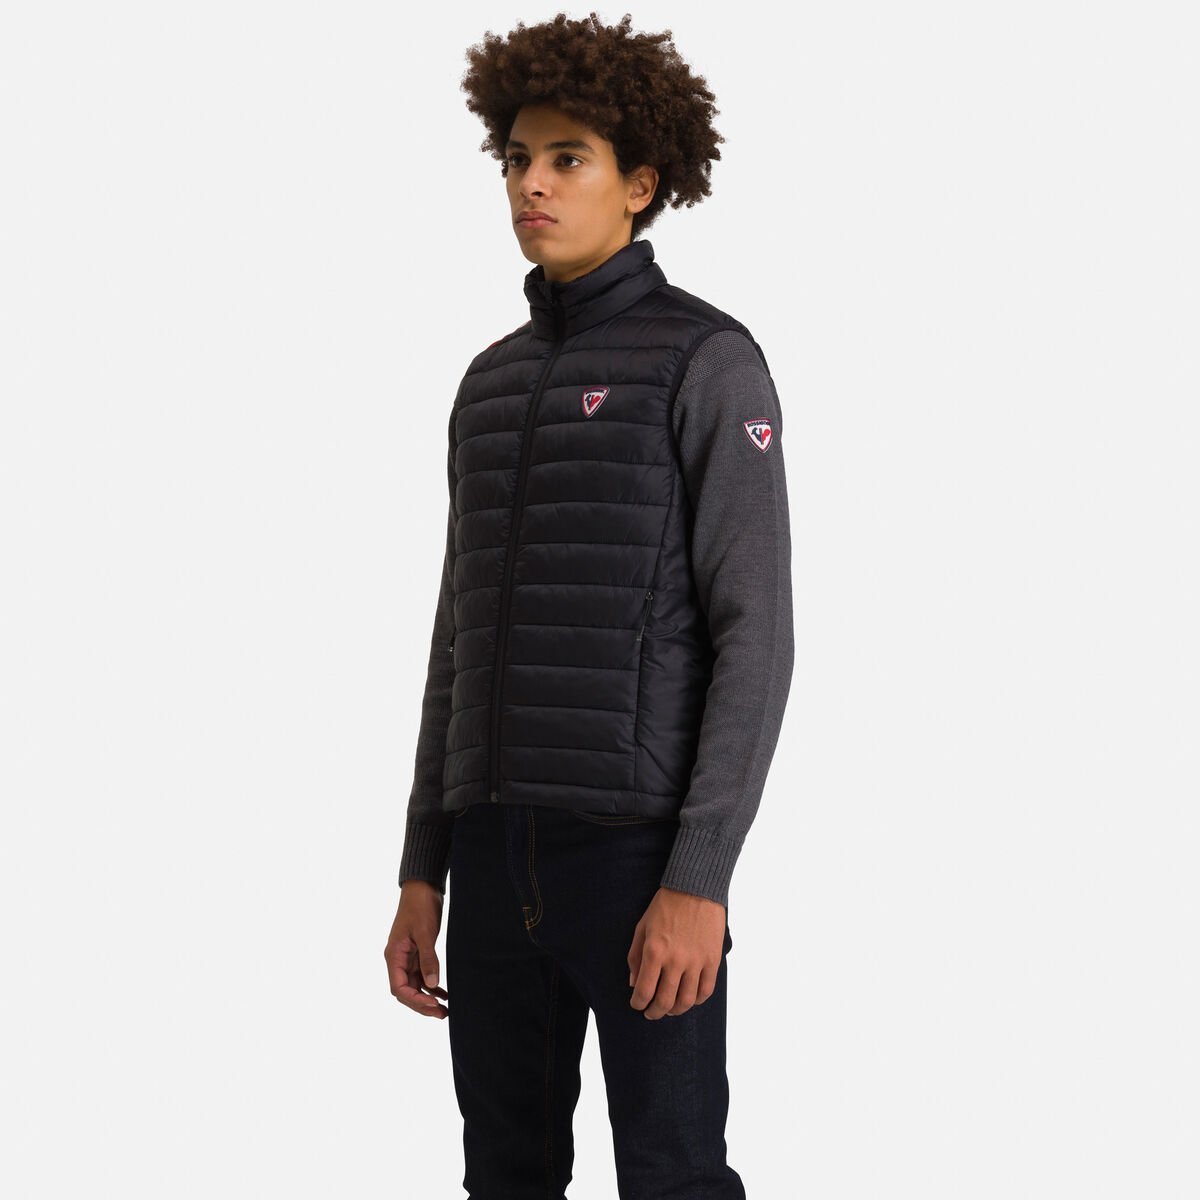 Rossignol Men's insulated vest 180GR black